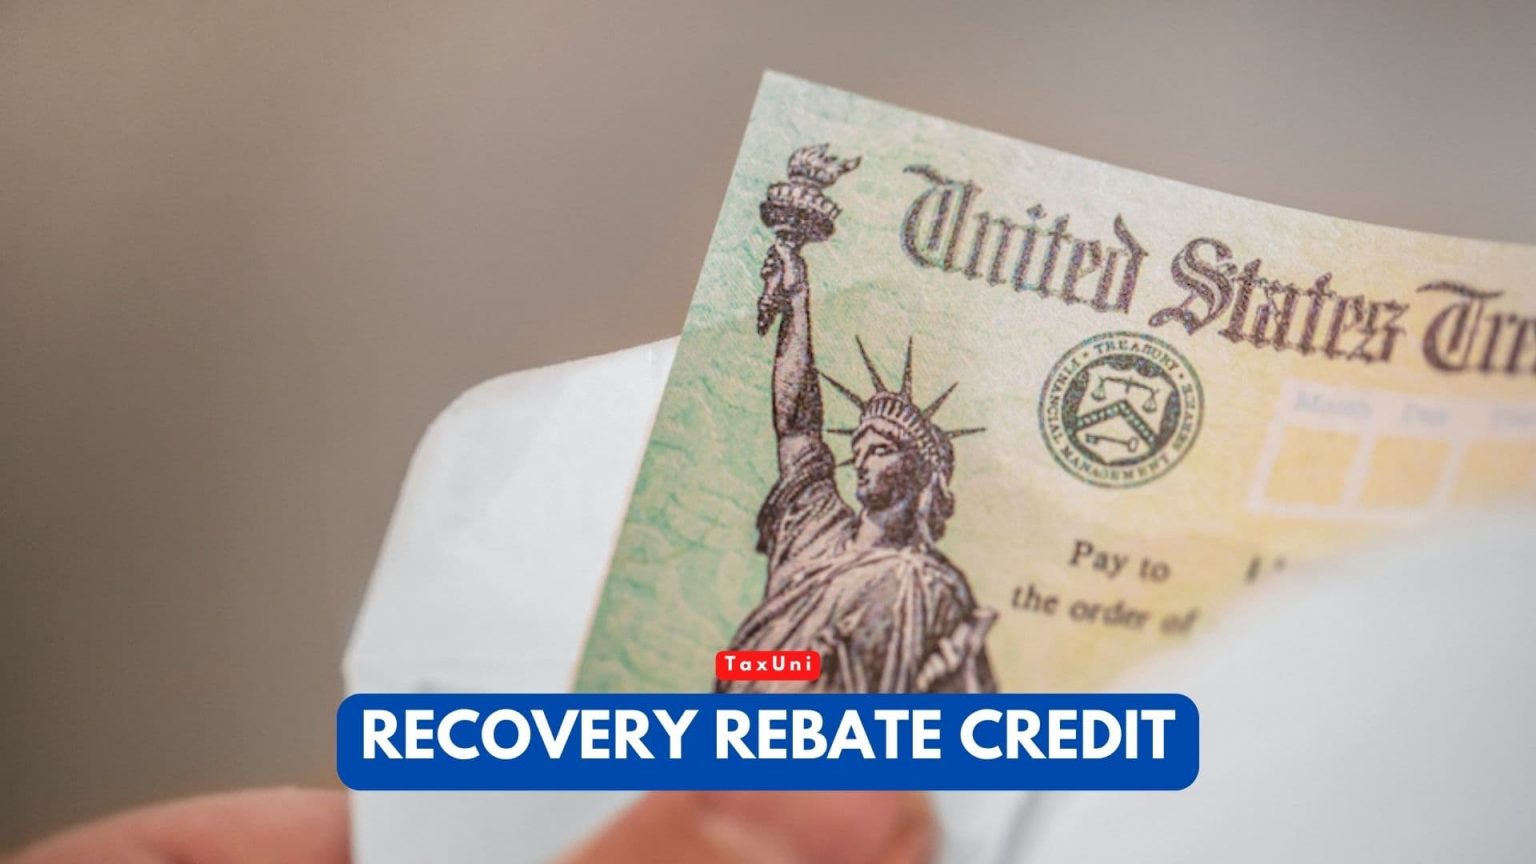 line-30-recovery-rebate-credit-2022-recovery-rebate